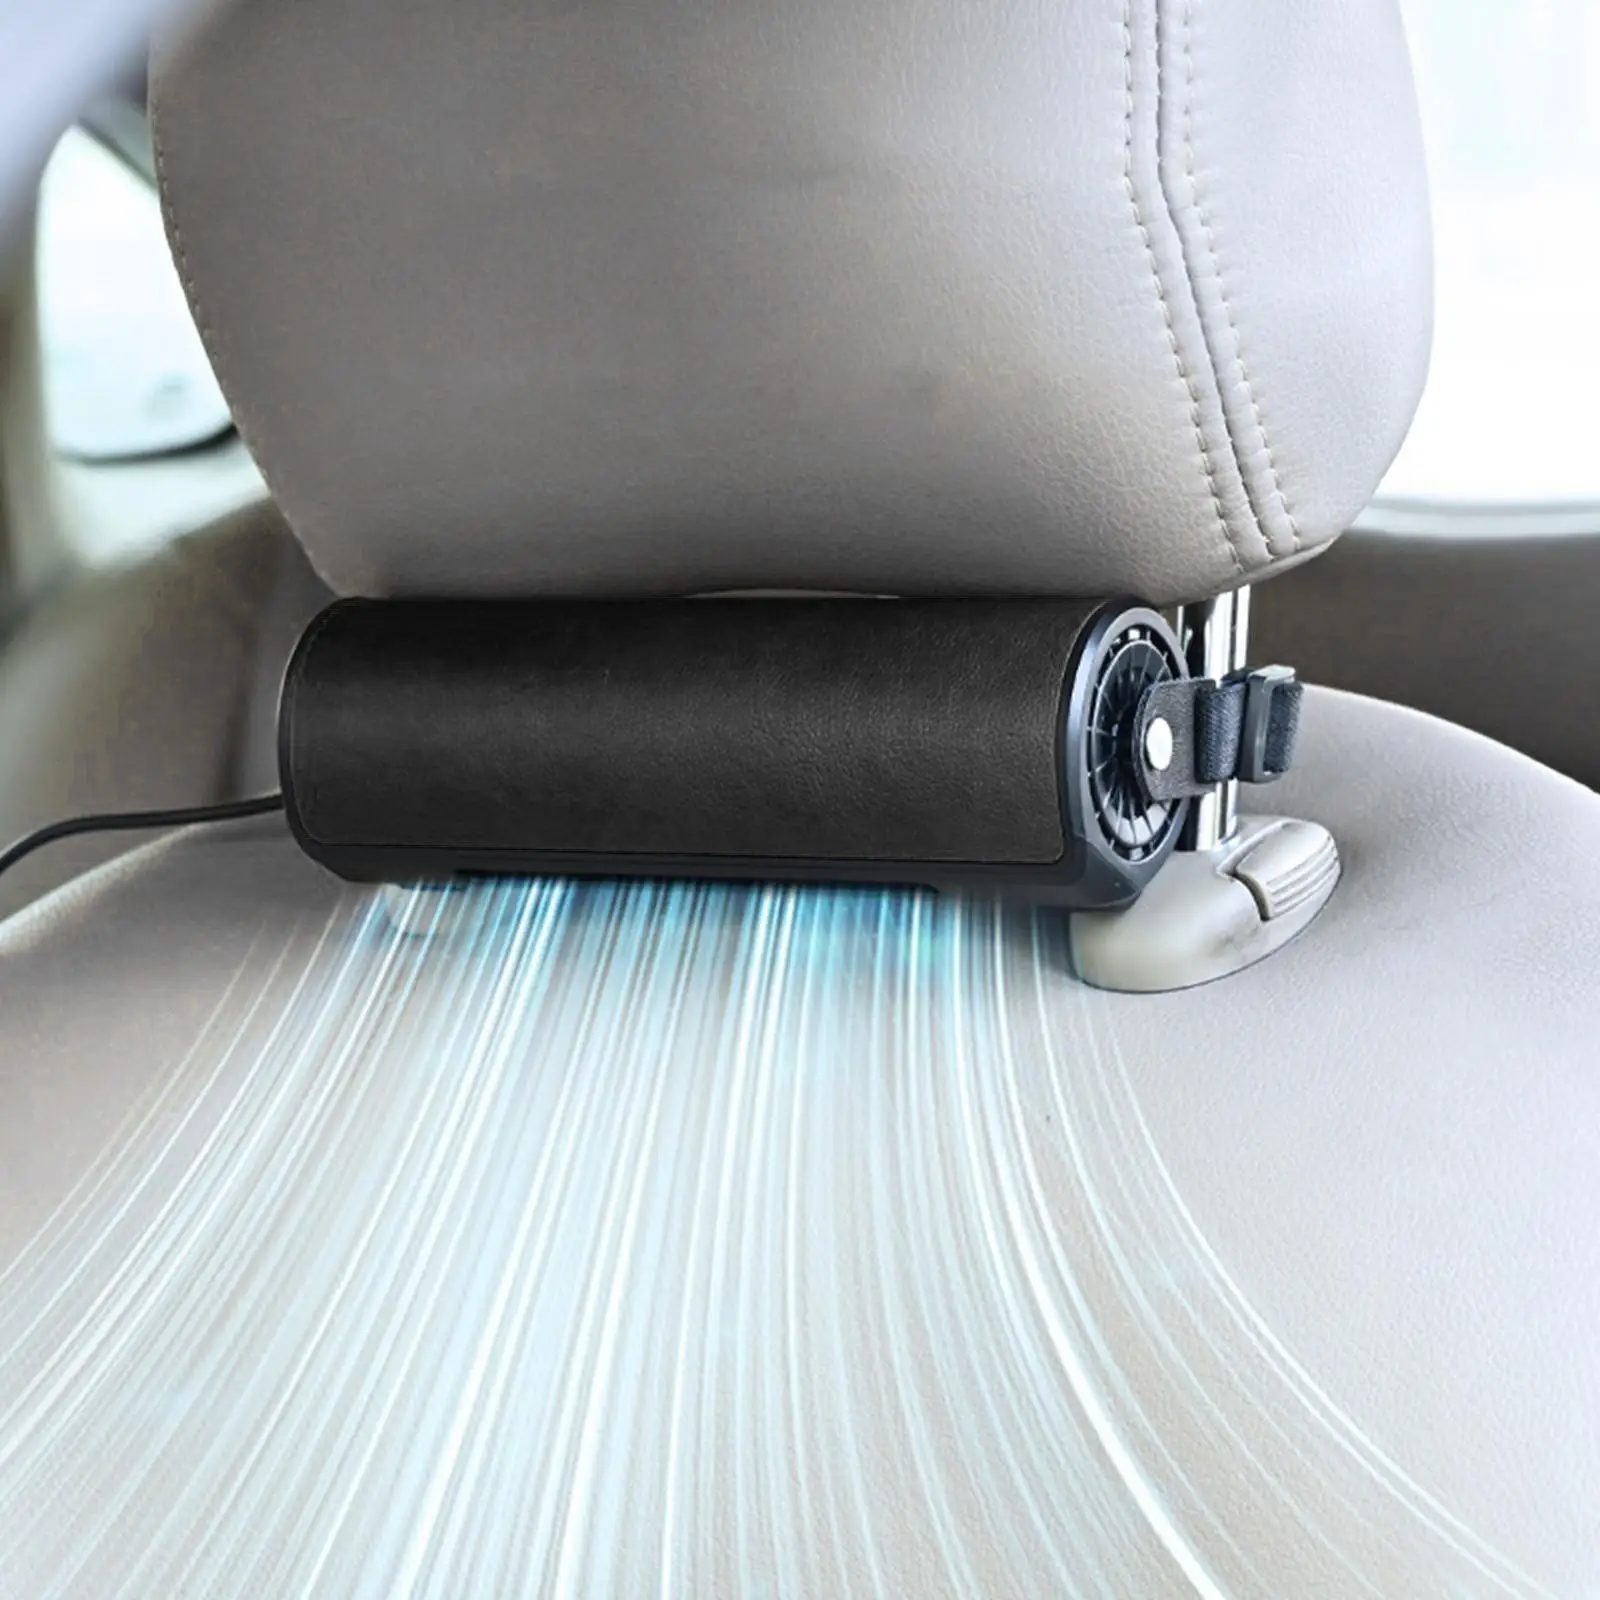 Automotive Car Air Vent Fan USB Universal 3 Adjustable Speeds Premium Circulation Air Conditioner Vehicle Car Cooling Fan